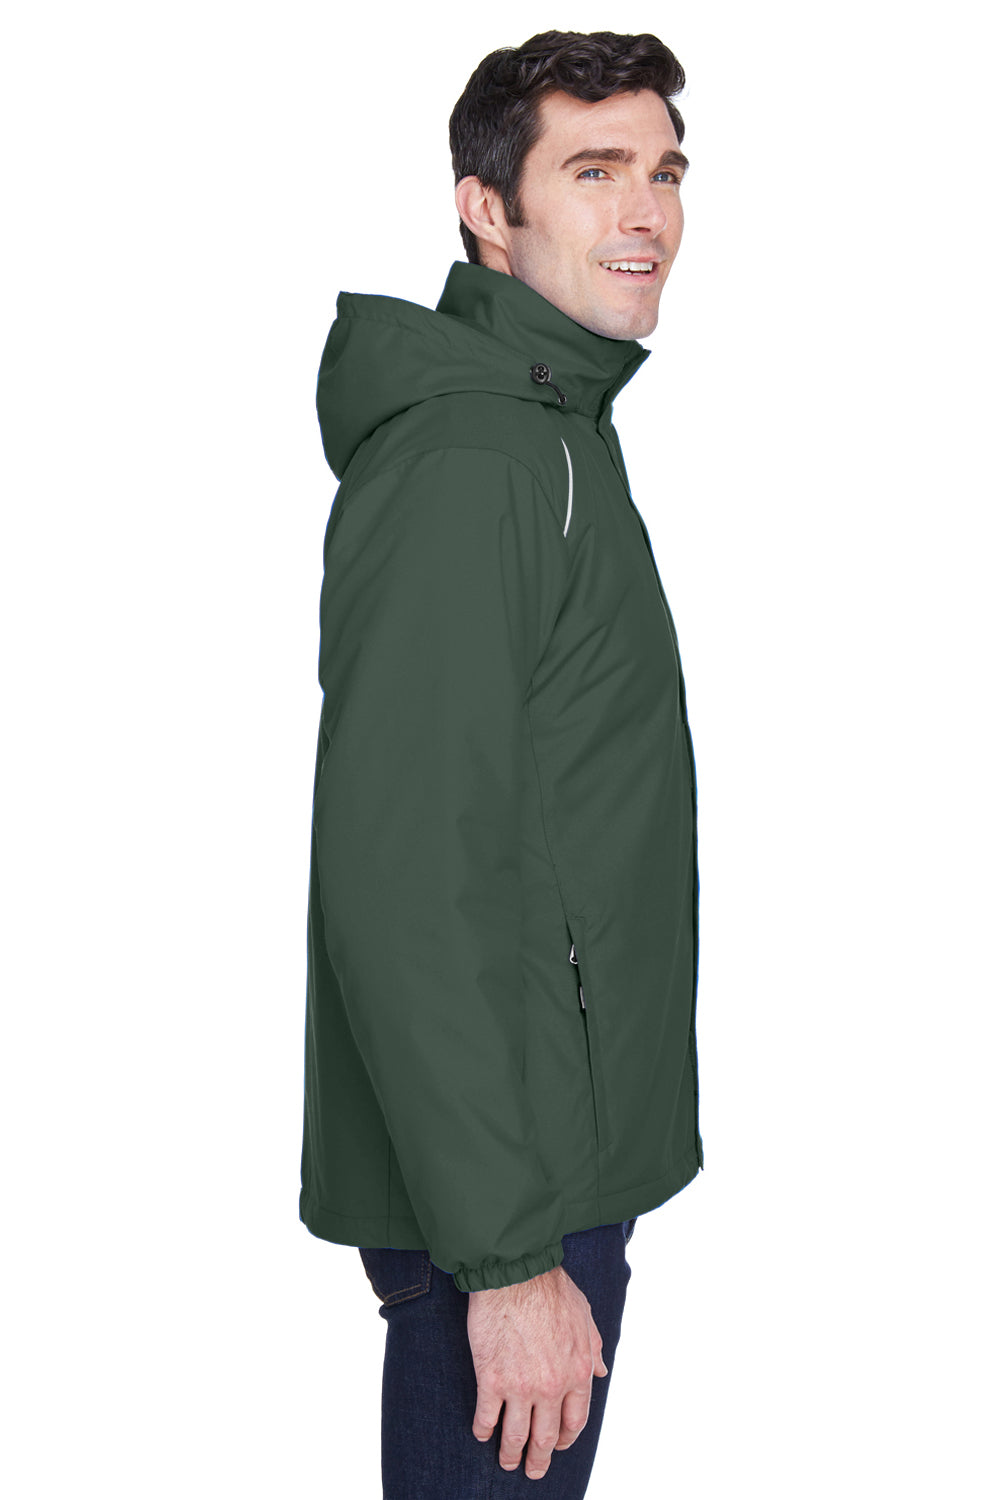 Core 365 88189 Mens Brisk Full Zip Hooded Jacket Forest Green Side